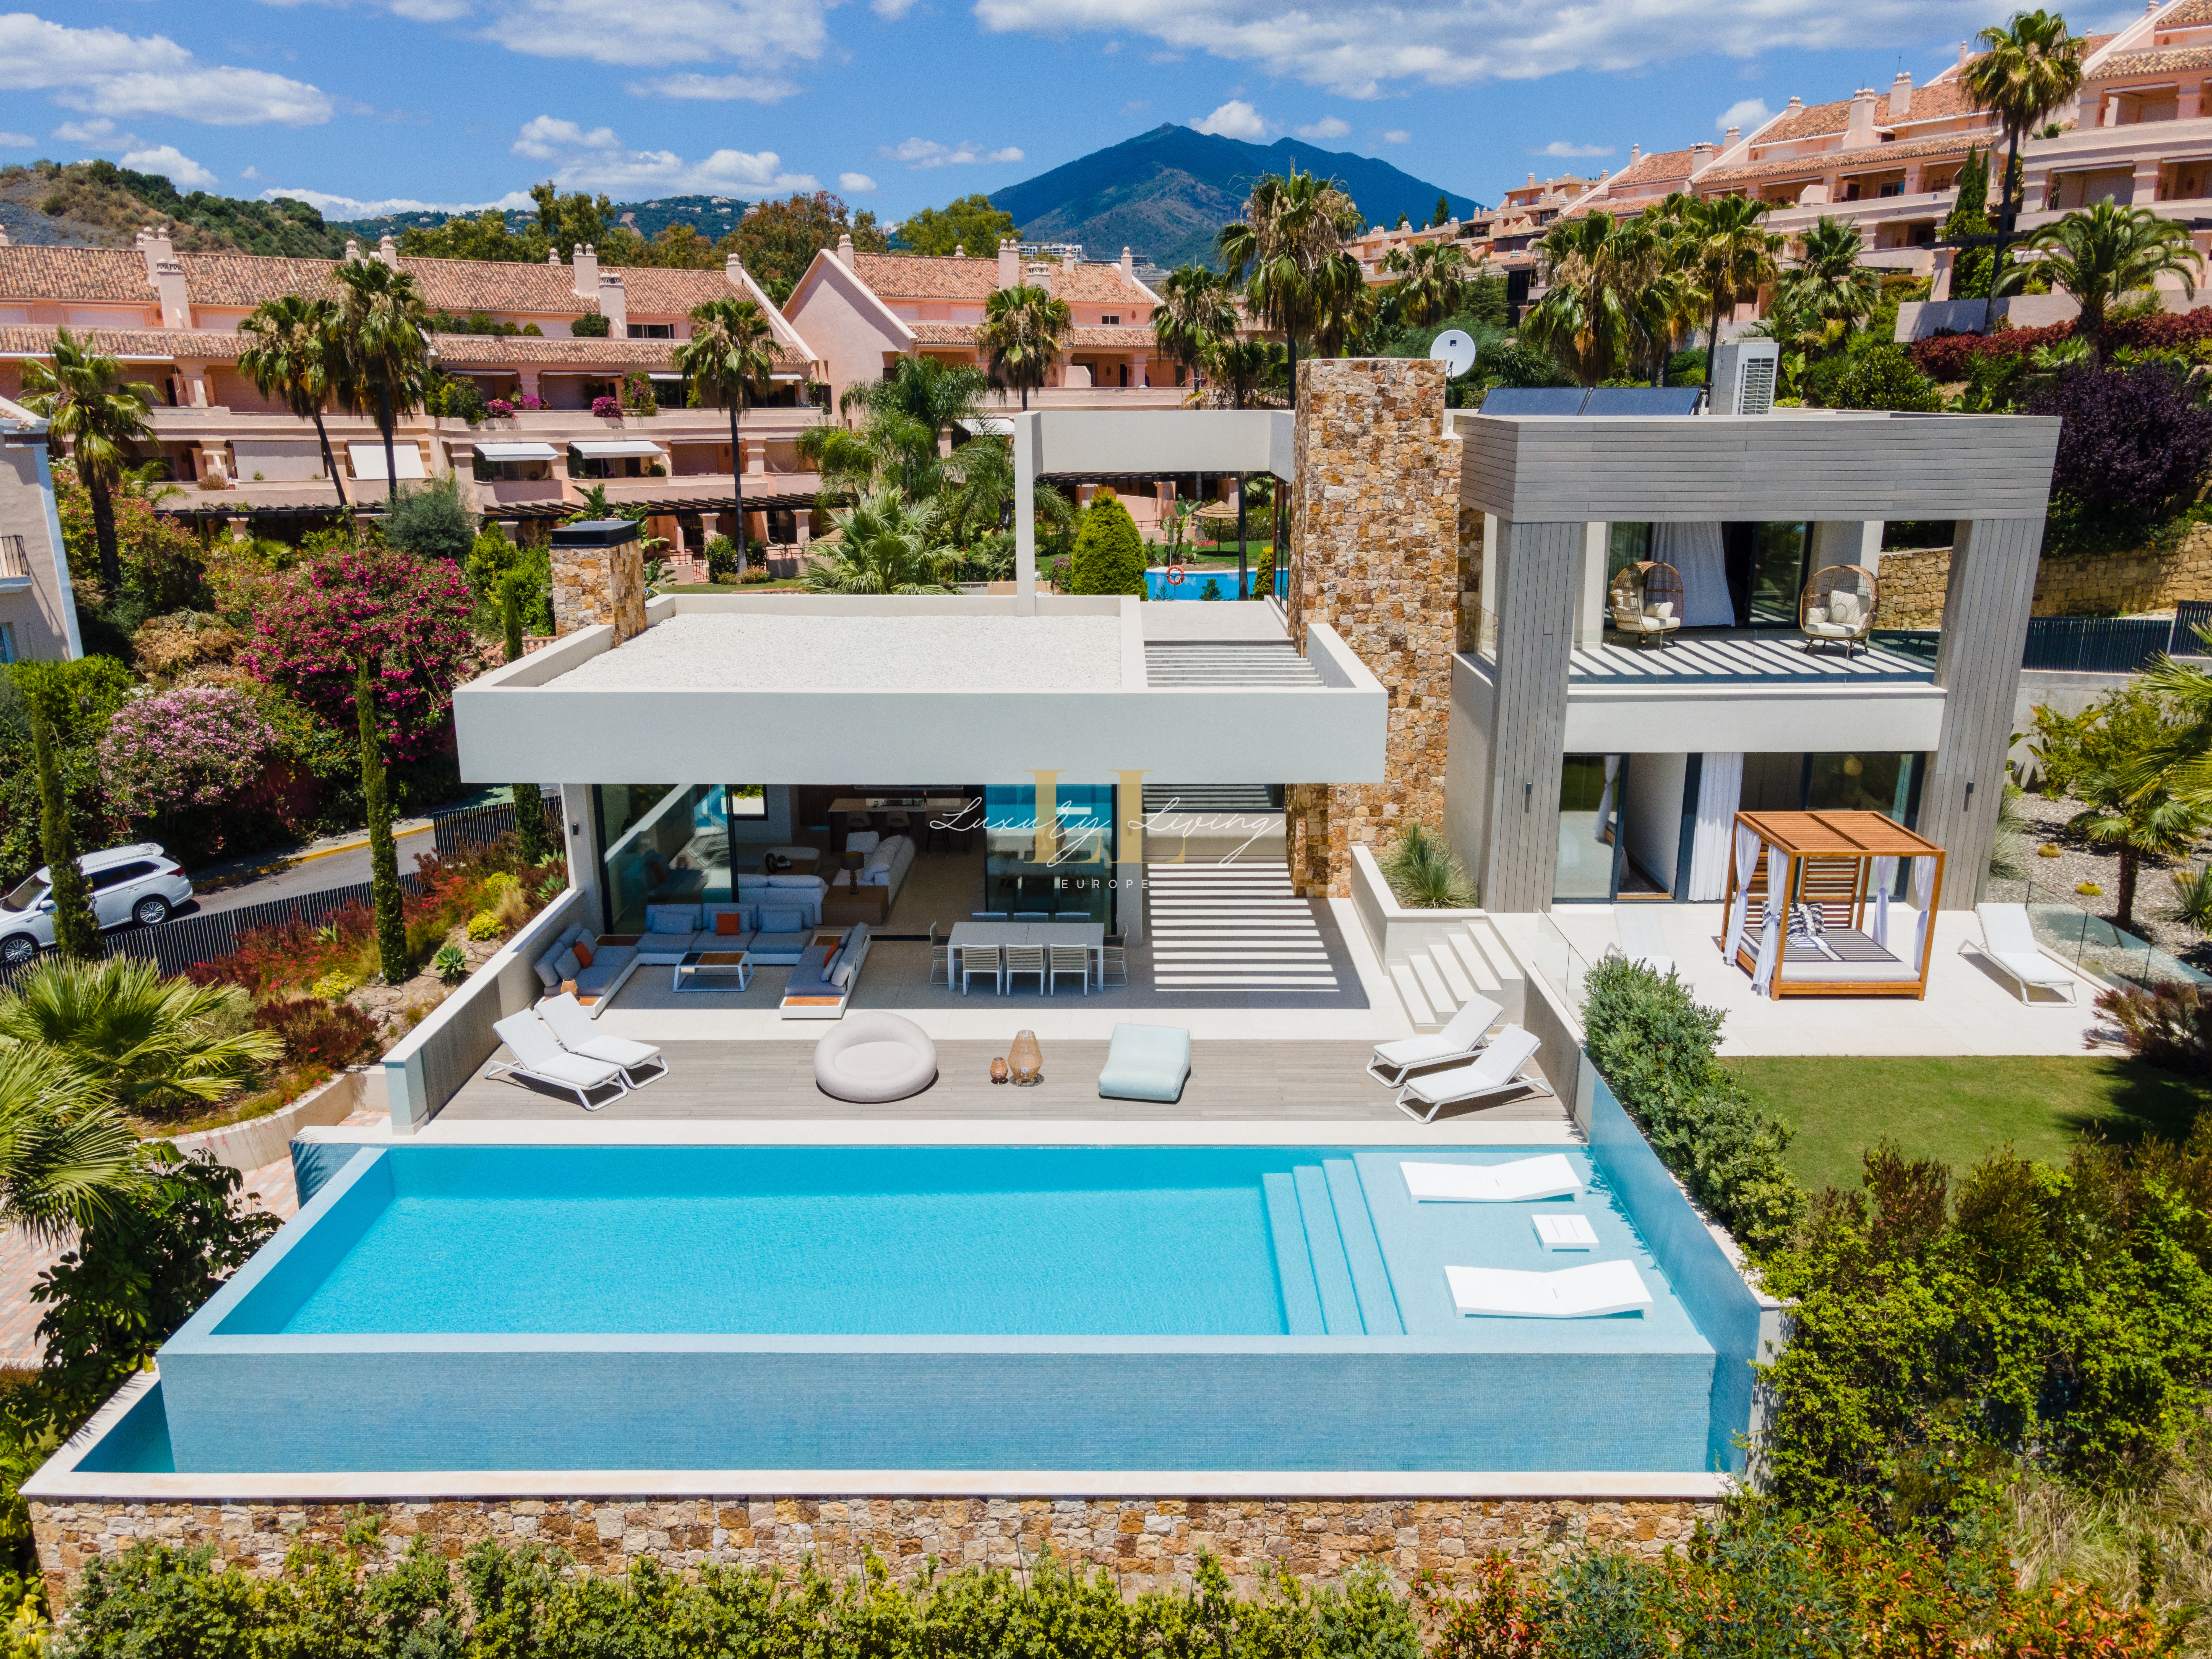 Villa Namaste Accommodation in Marbella